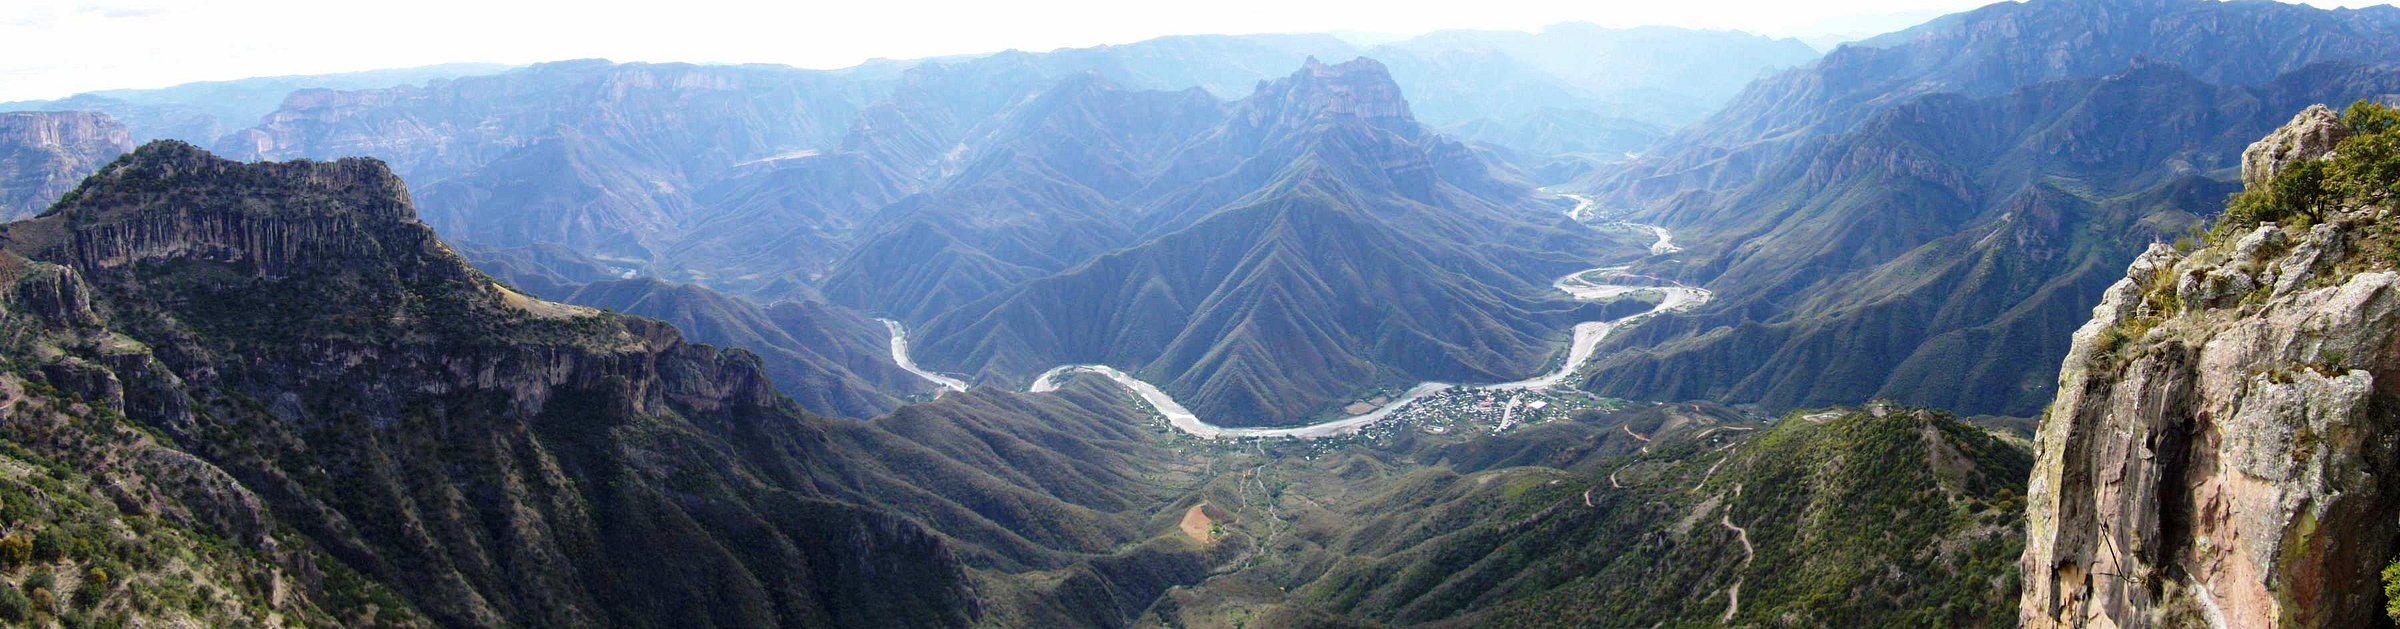 Sierra Tarahumara - Copper Canyon